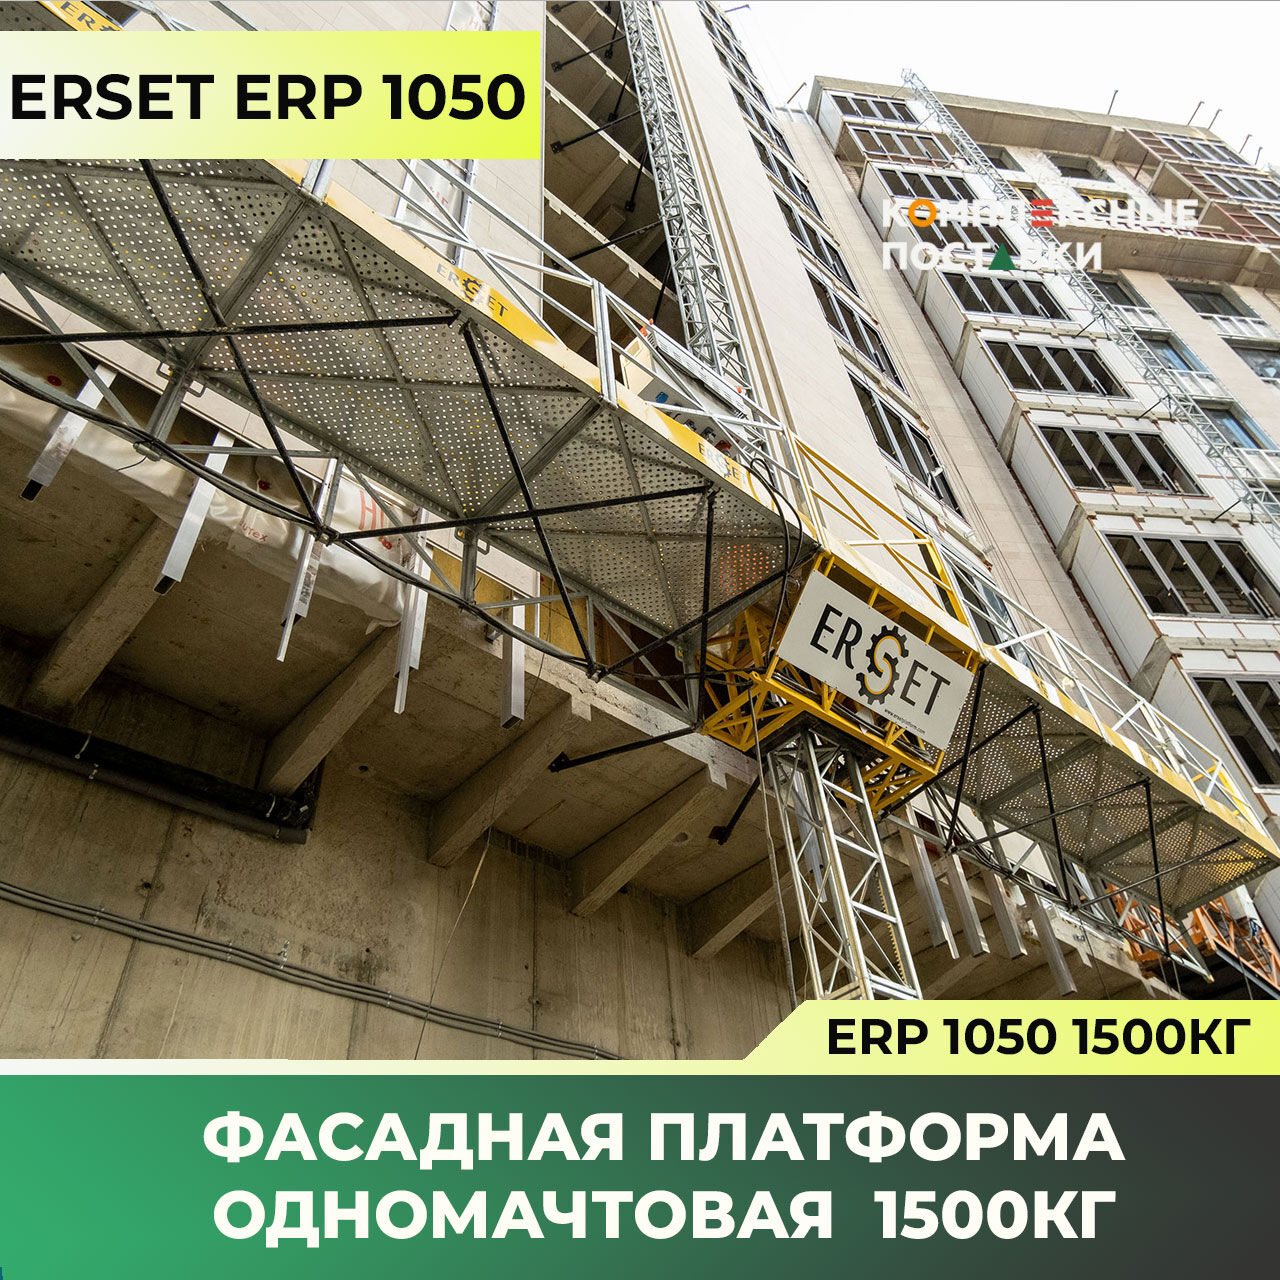 ERP 1050 Фасадная платформа Одномачтовая (Турция) до 1500 кг